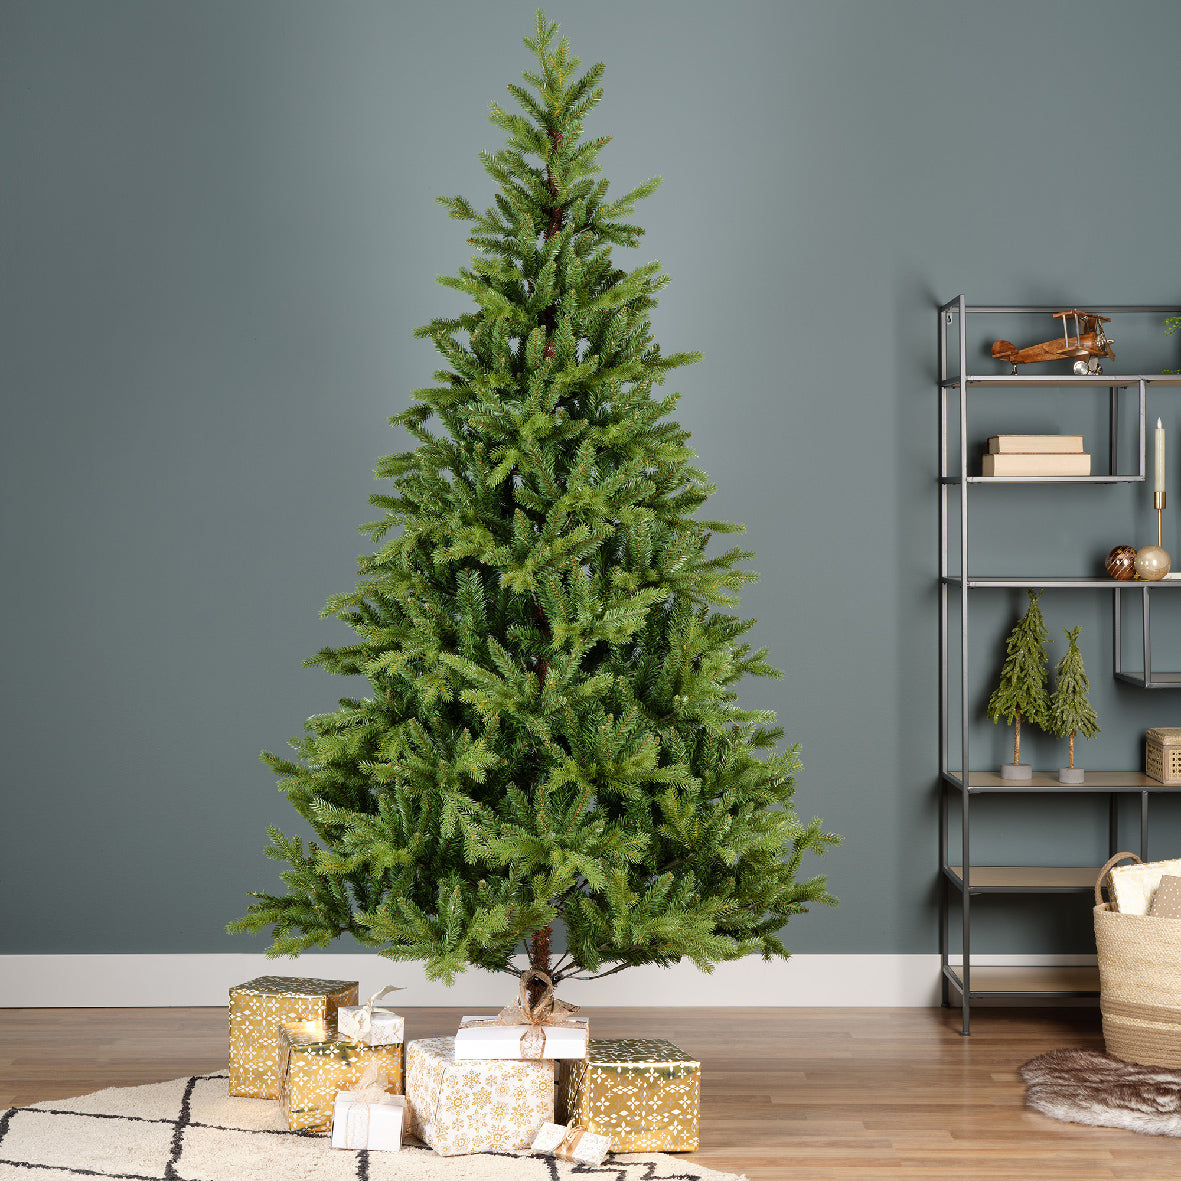 Everlands Allison Pine Christmas Tree 6ft/180cm